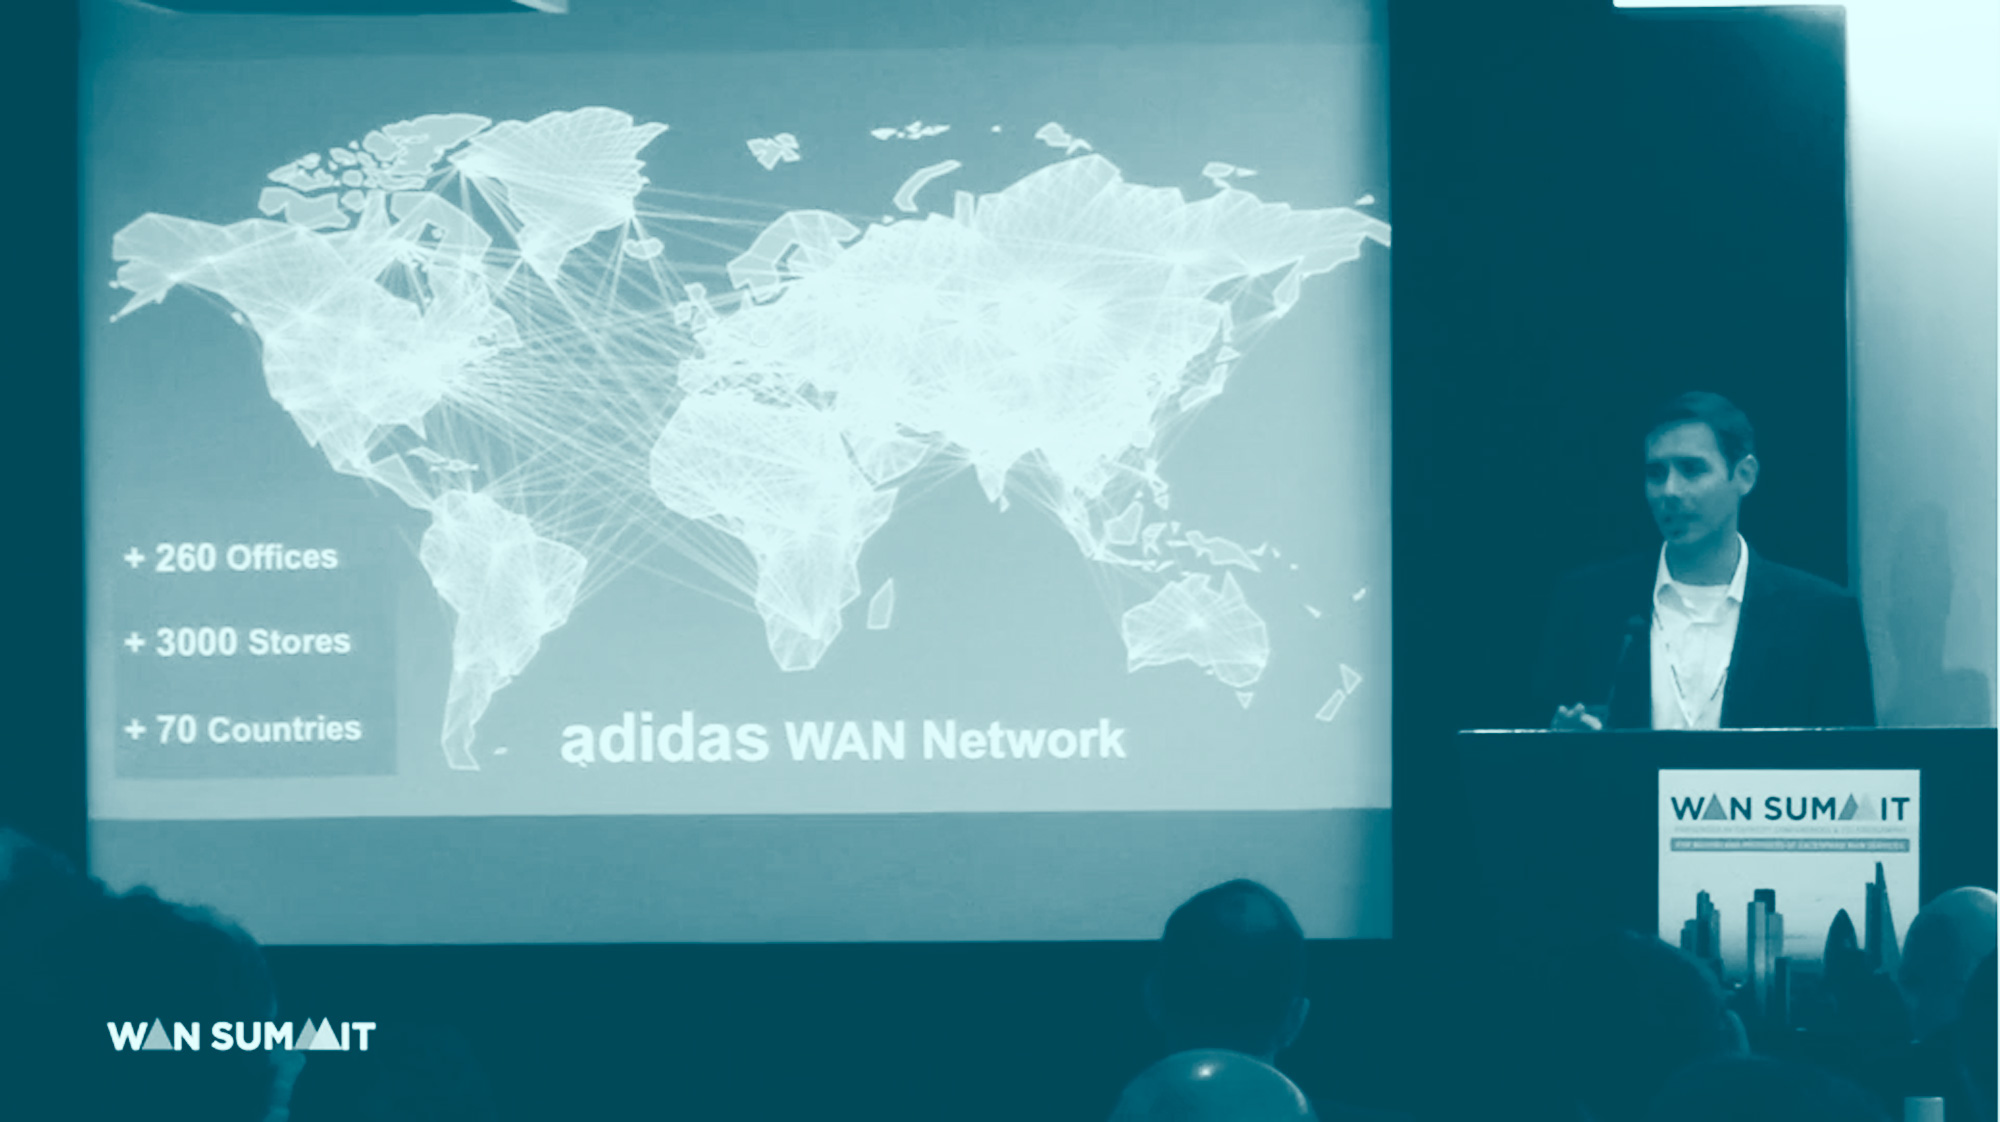 Adidas WAN Summit London 2015